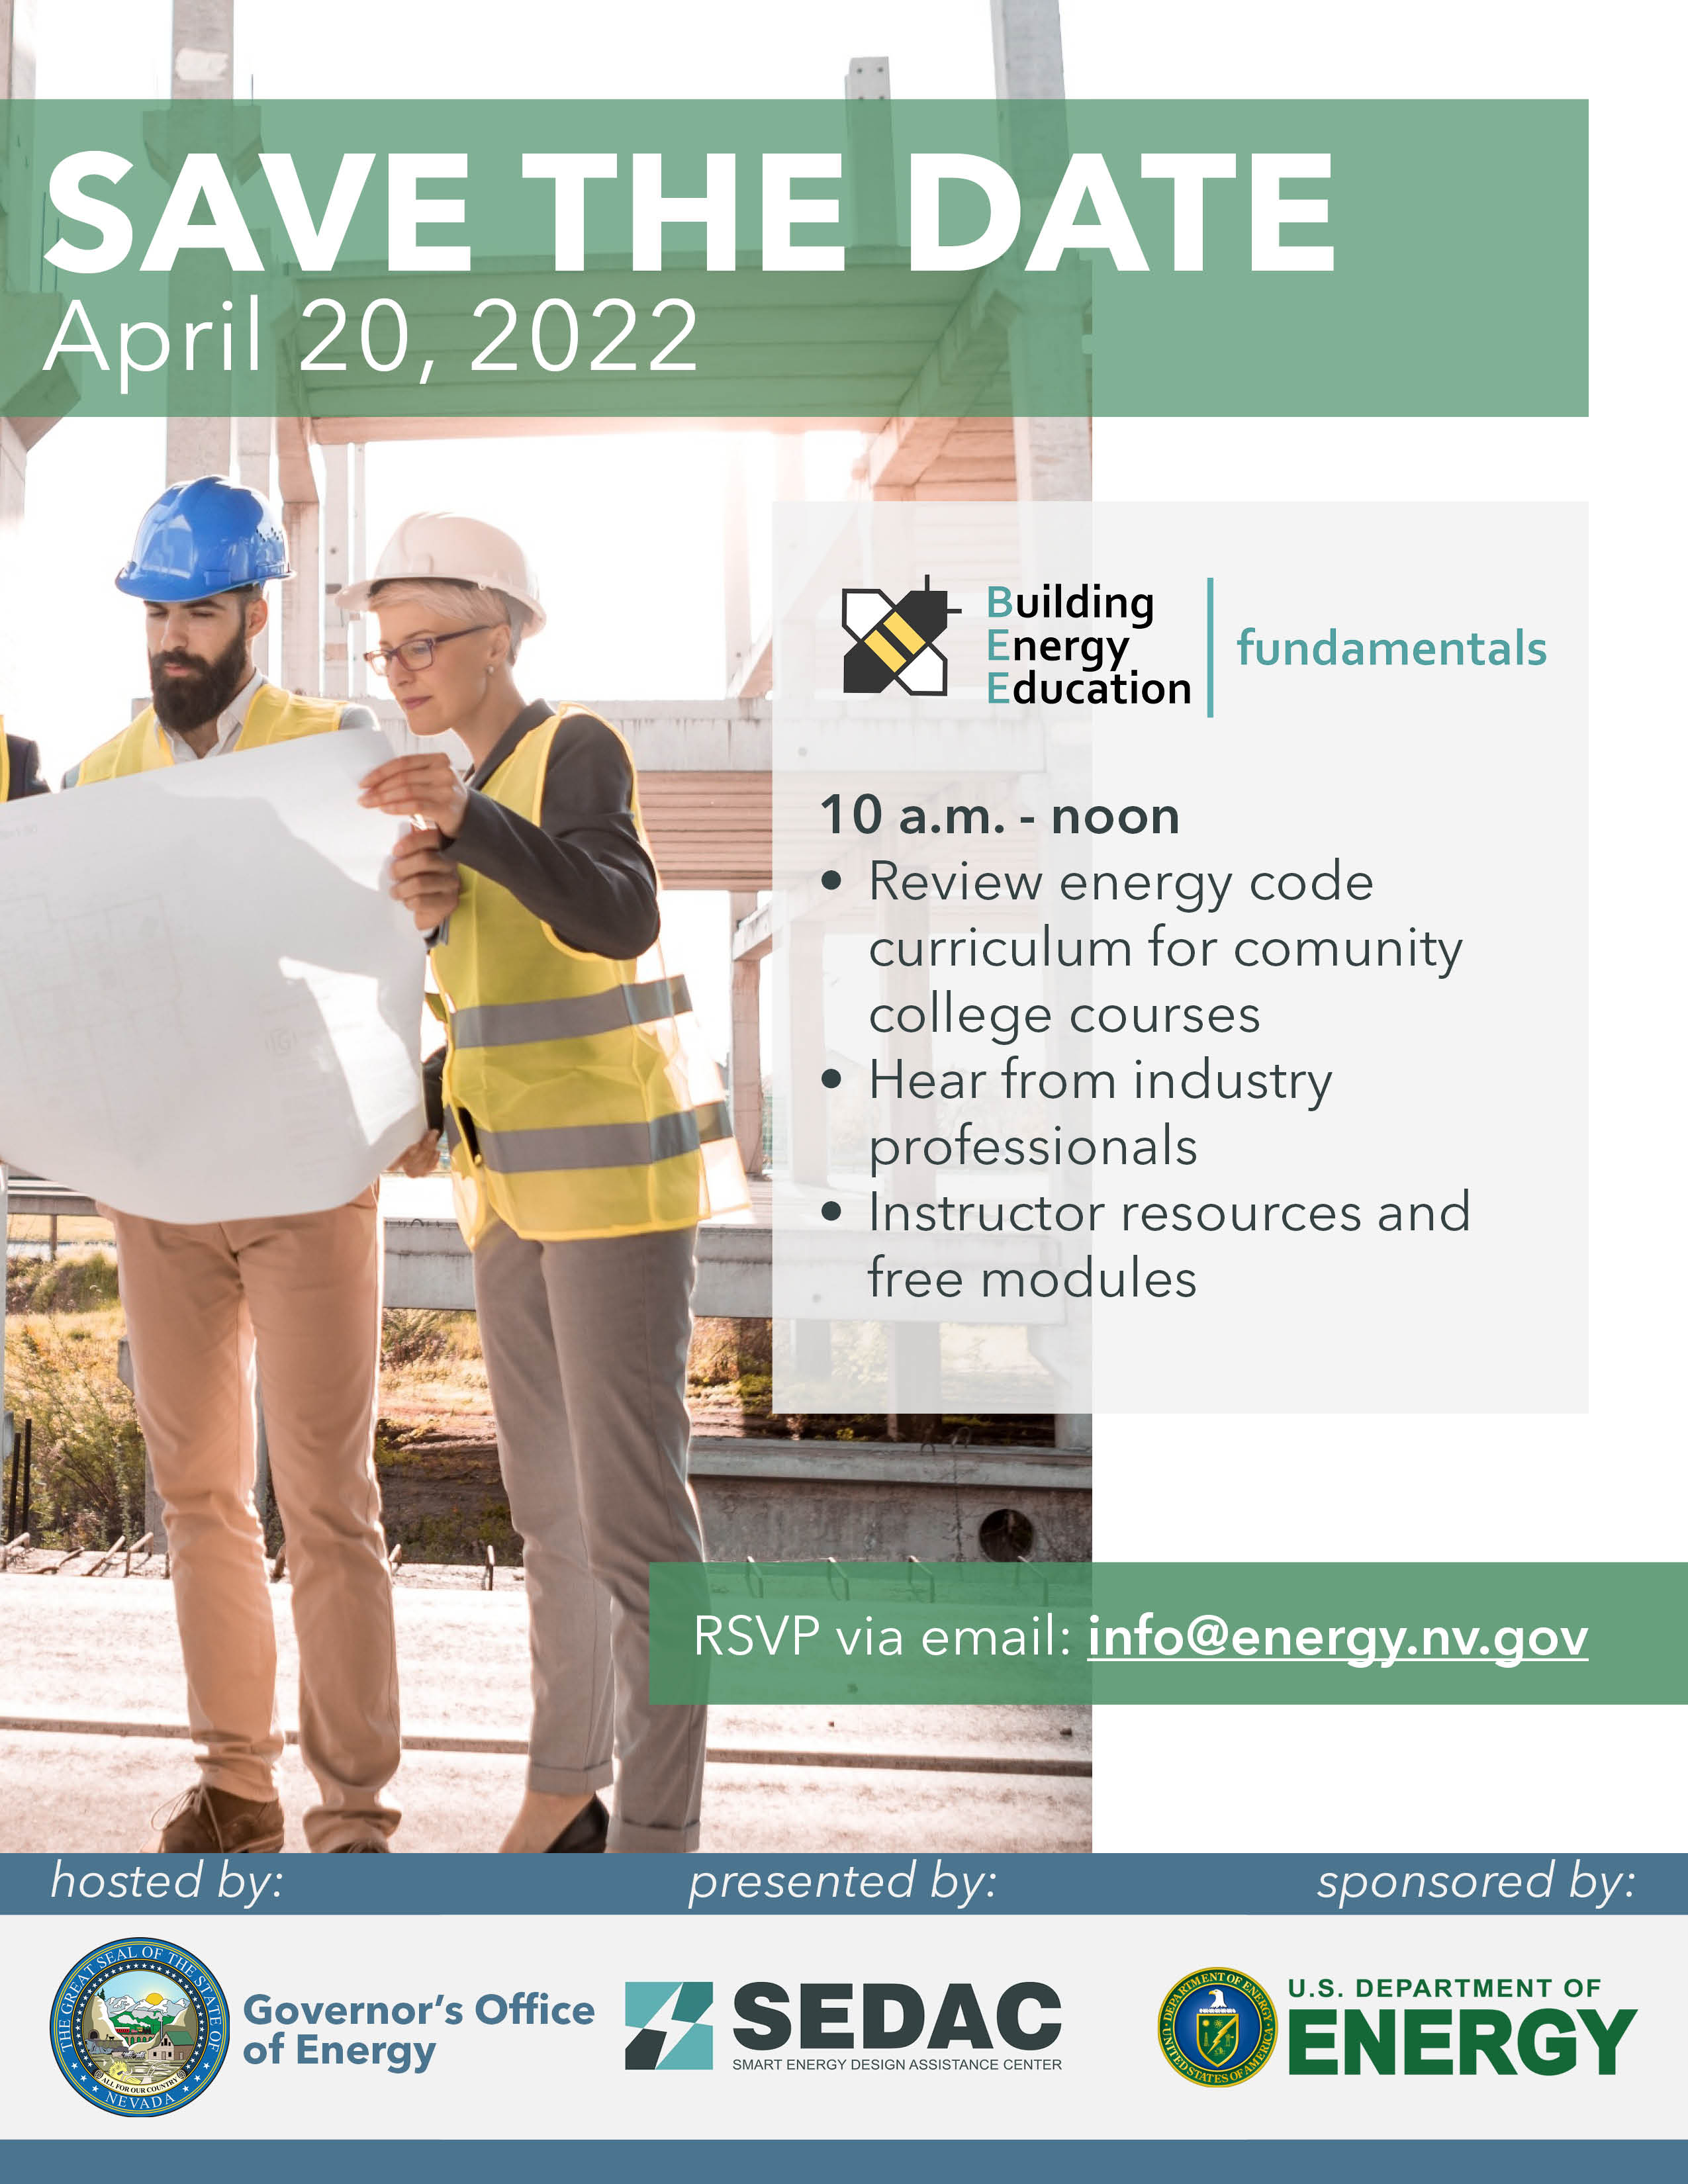 Building Energy Education Fundamentals Training: April 20, 2022